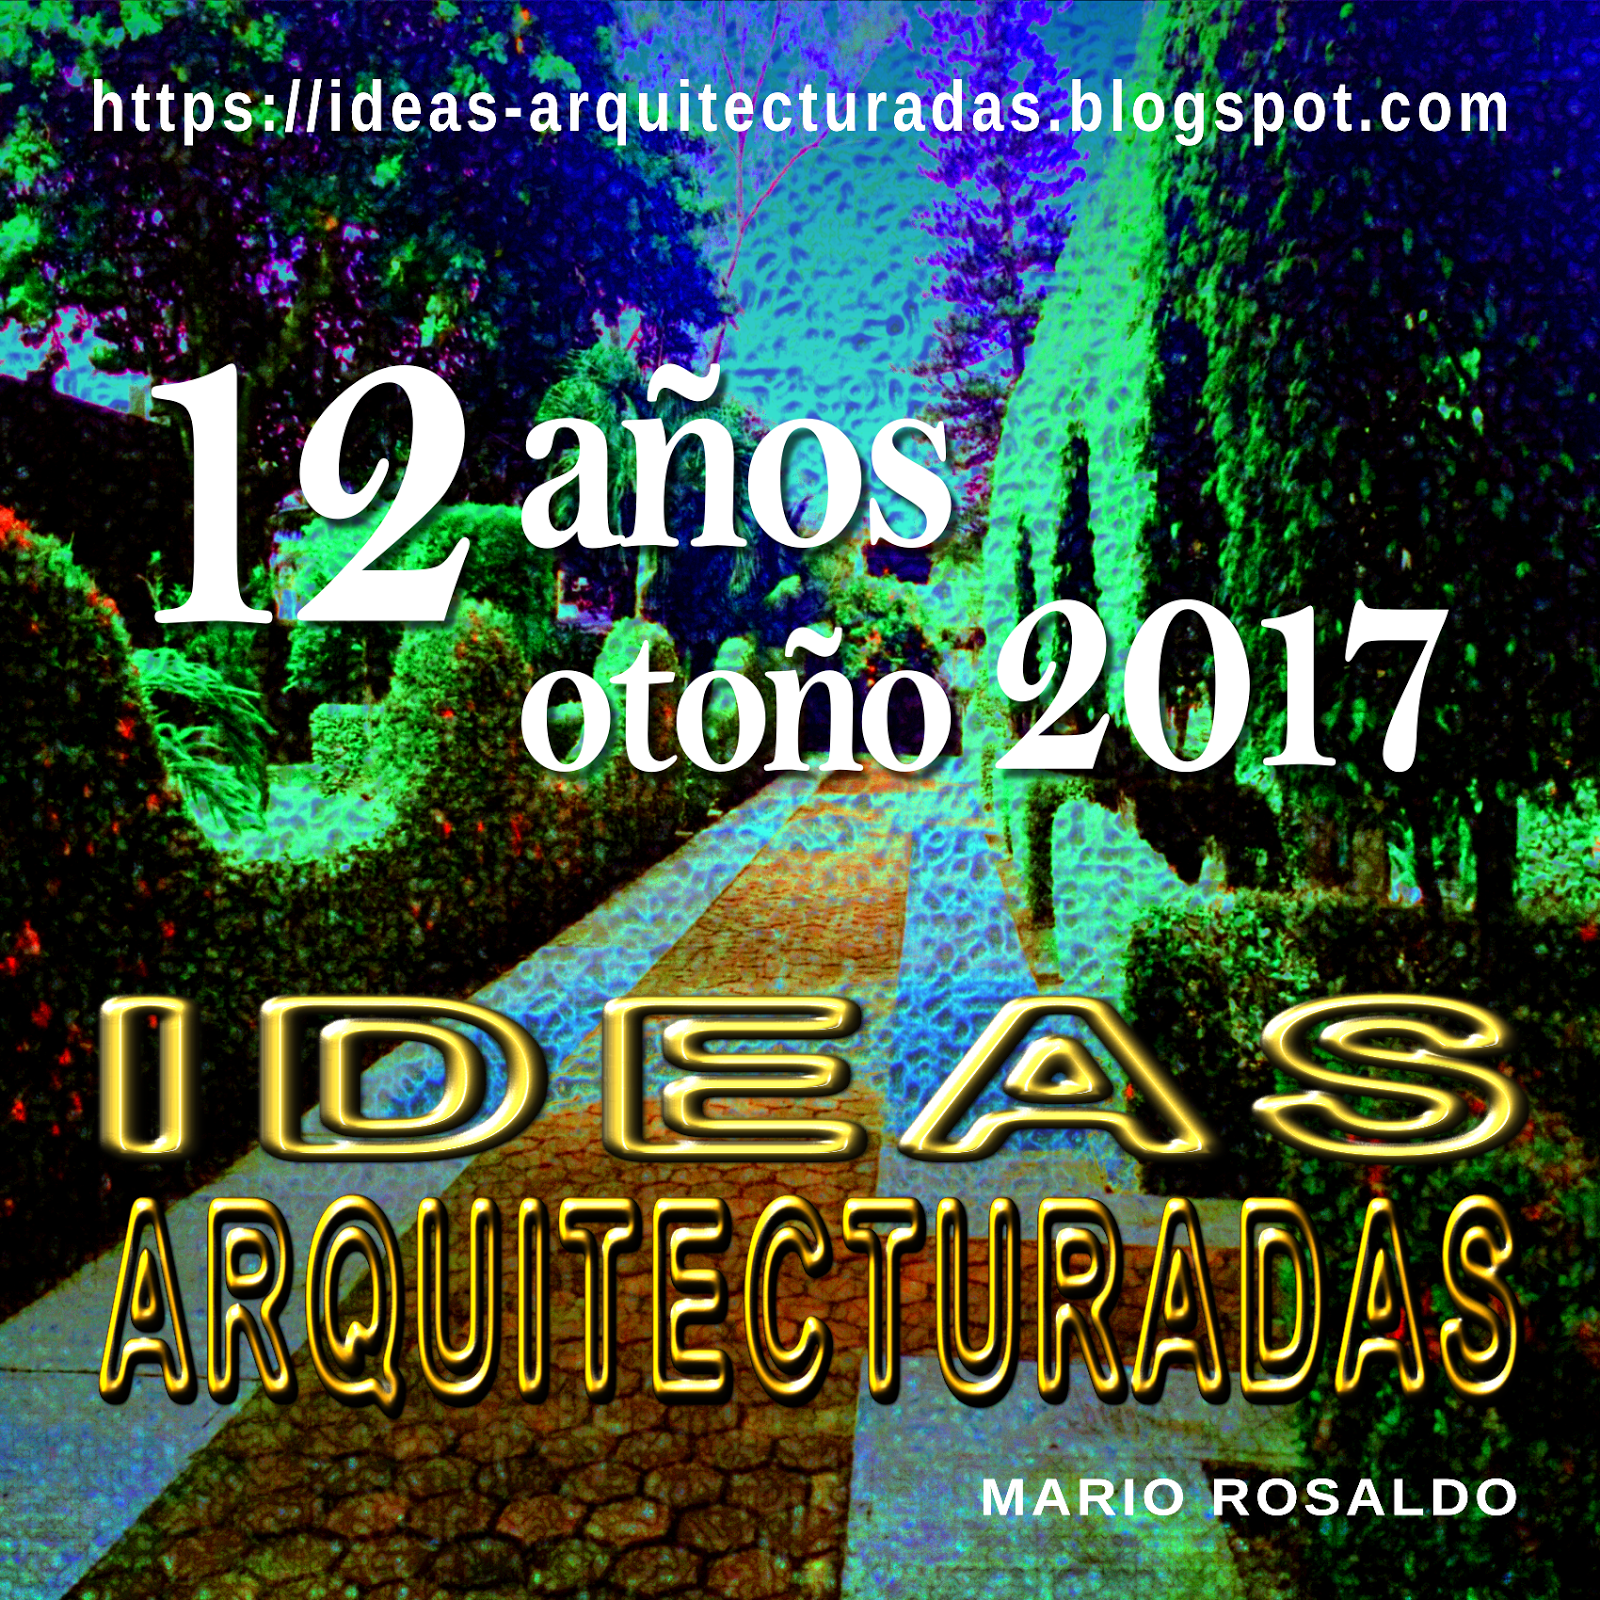 (c) Ideas-arquitecturadas.blogspot.com